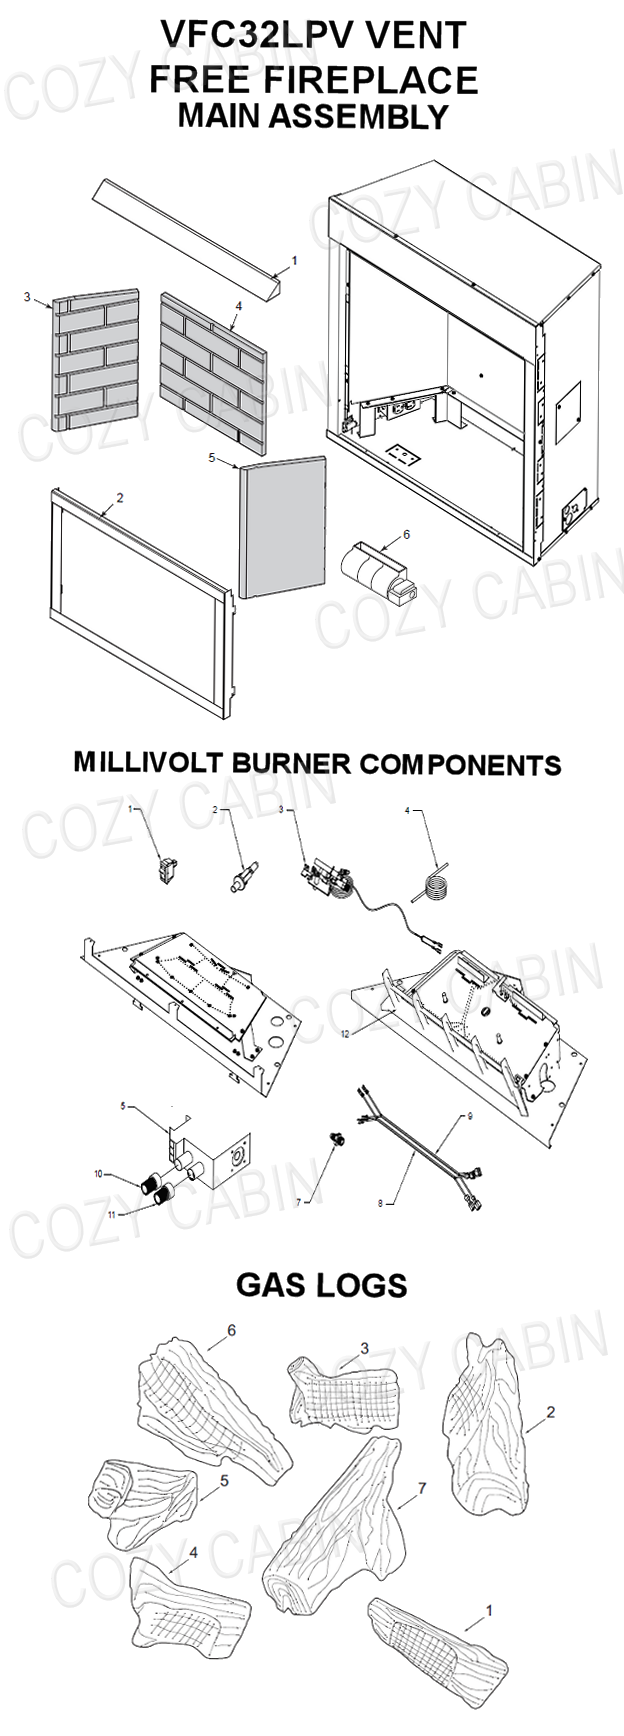 Monessen Vent Free LP Gas Fireplace System with Millivolt Burner (VFC32LPV) #VFC32LPV